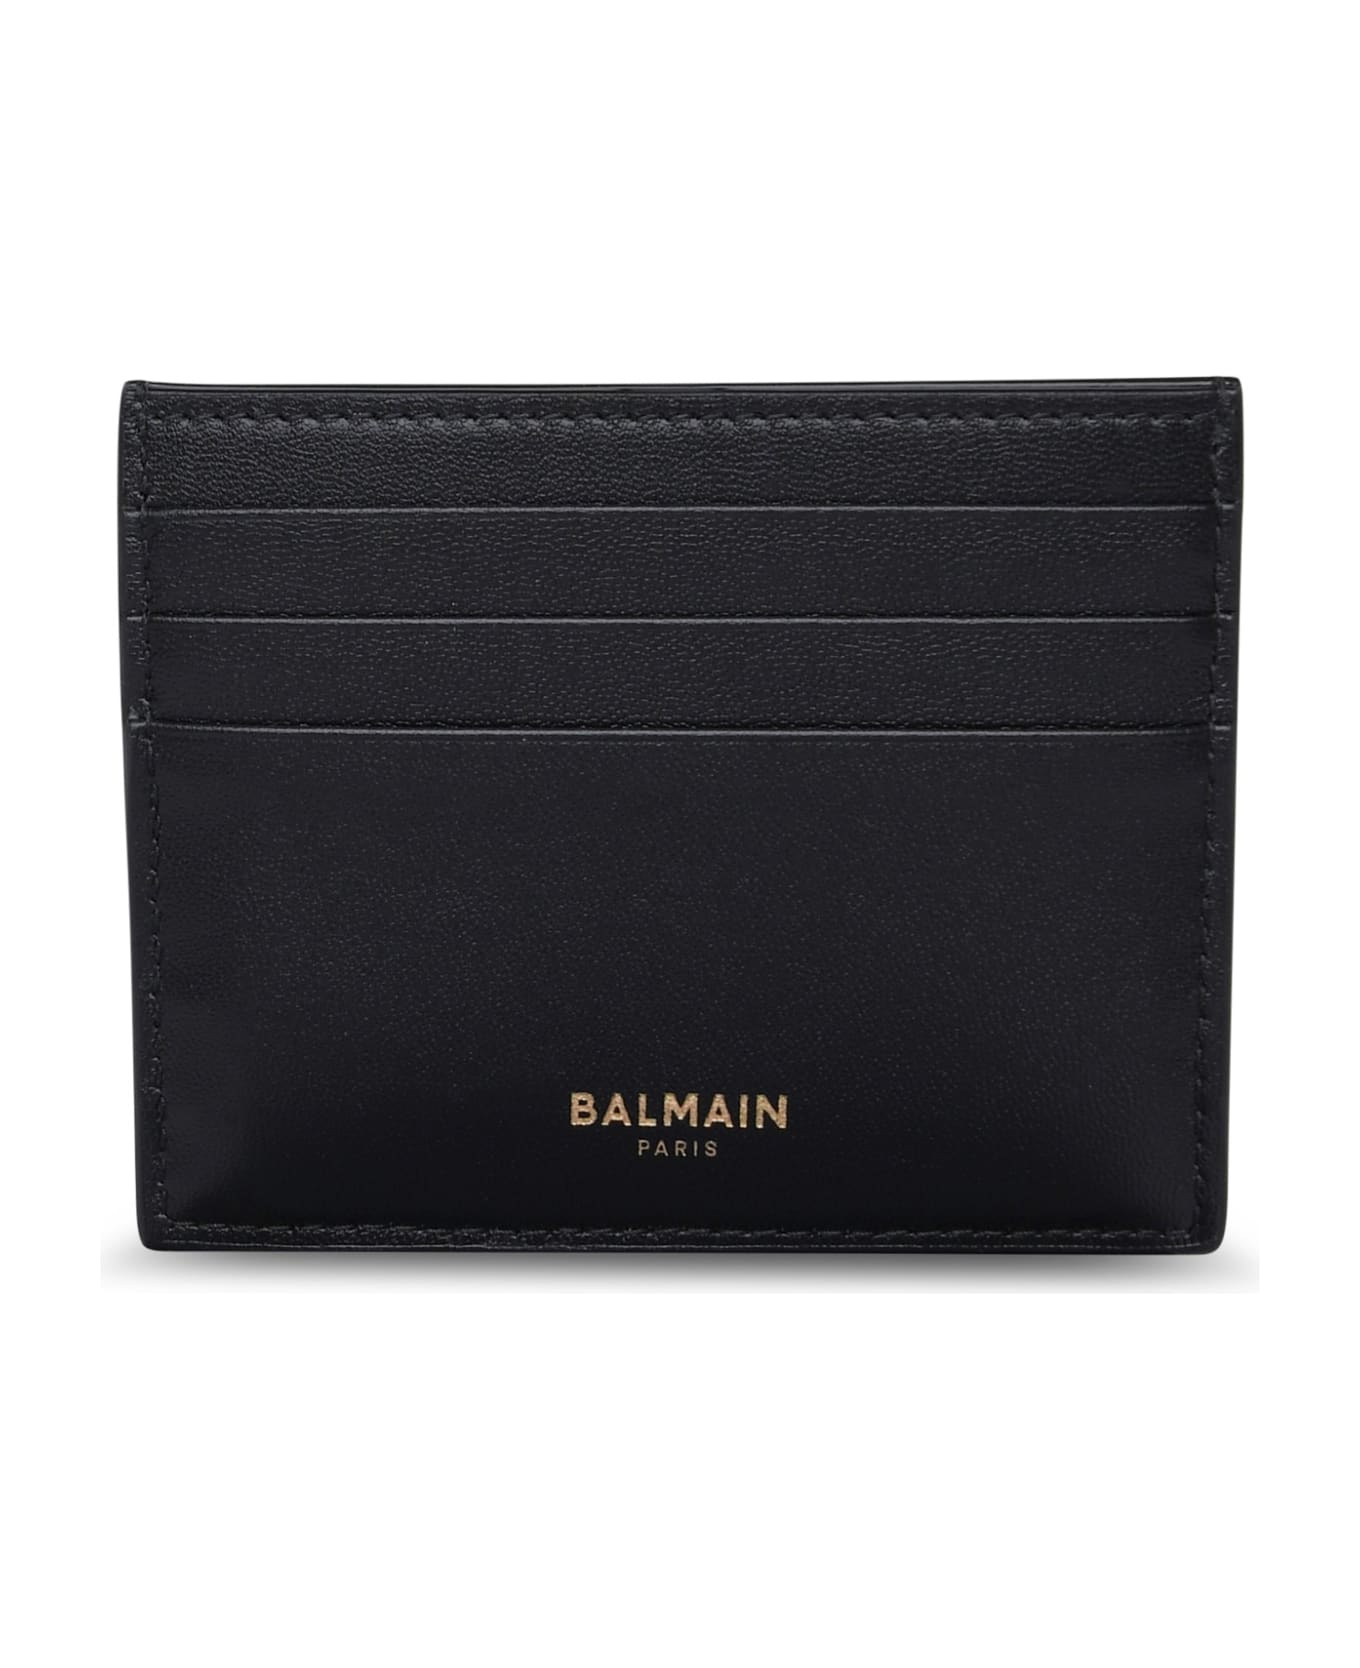 Balmain Black Leather 'bbuzz' Cardholder - Black